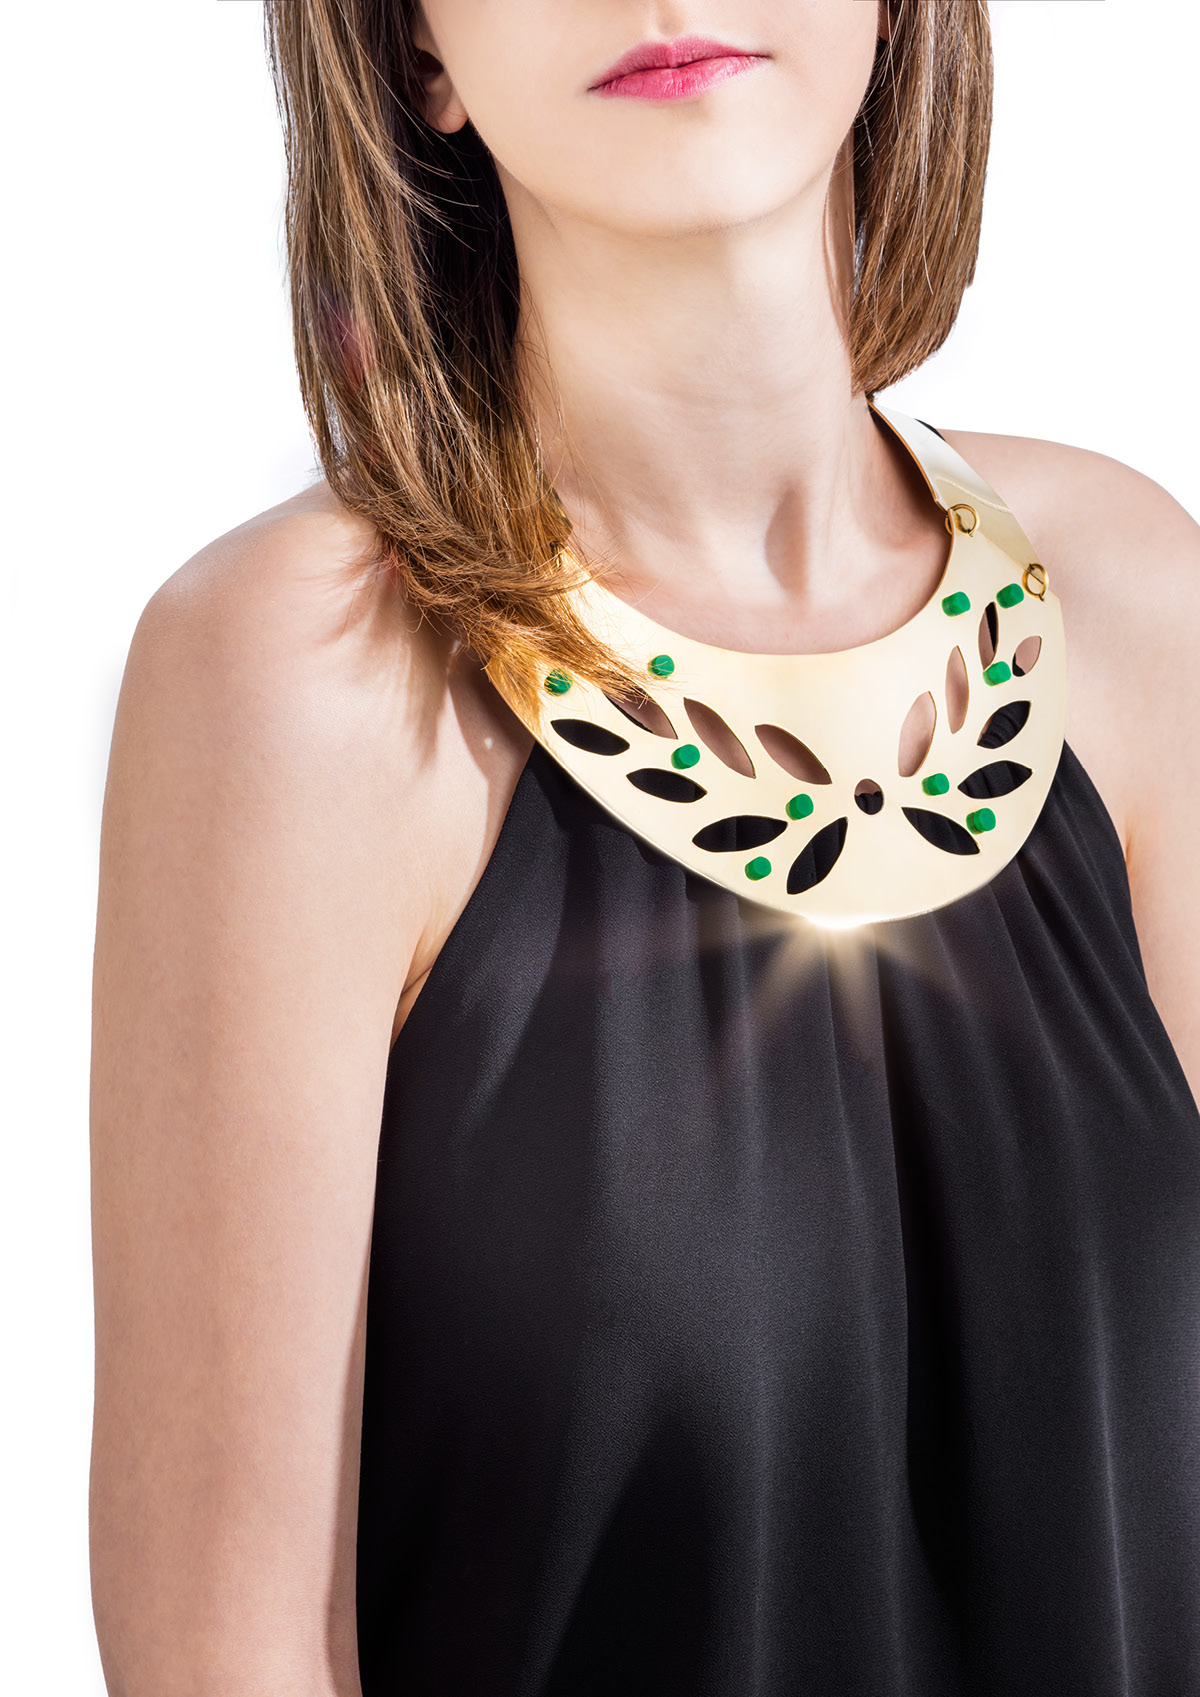 #jewelry #necklace #brass #ied #torino #project